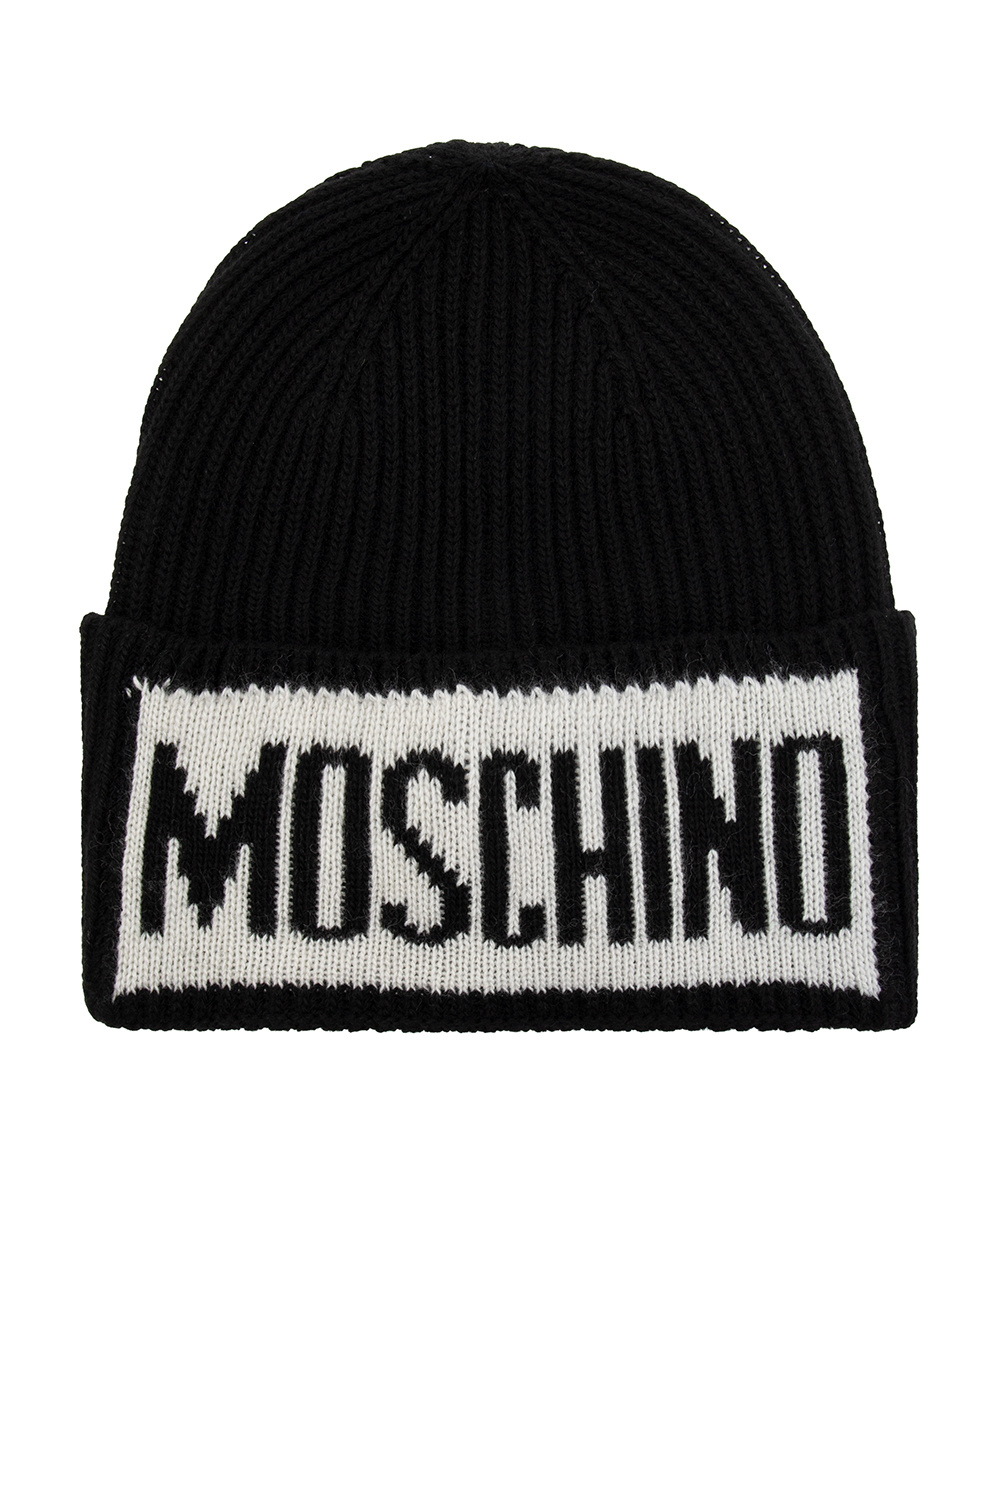 Moschino Basile hat with logo